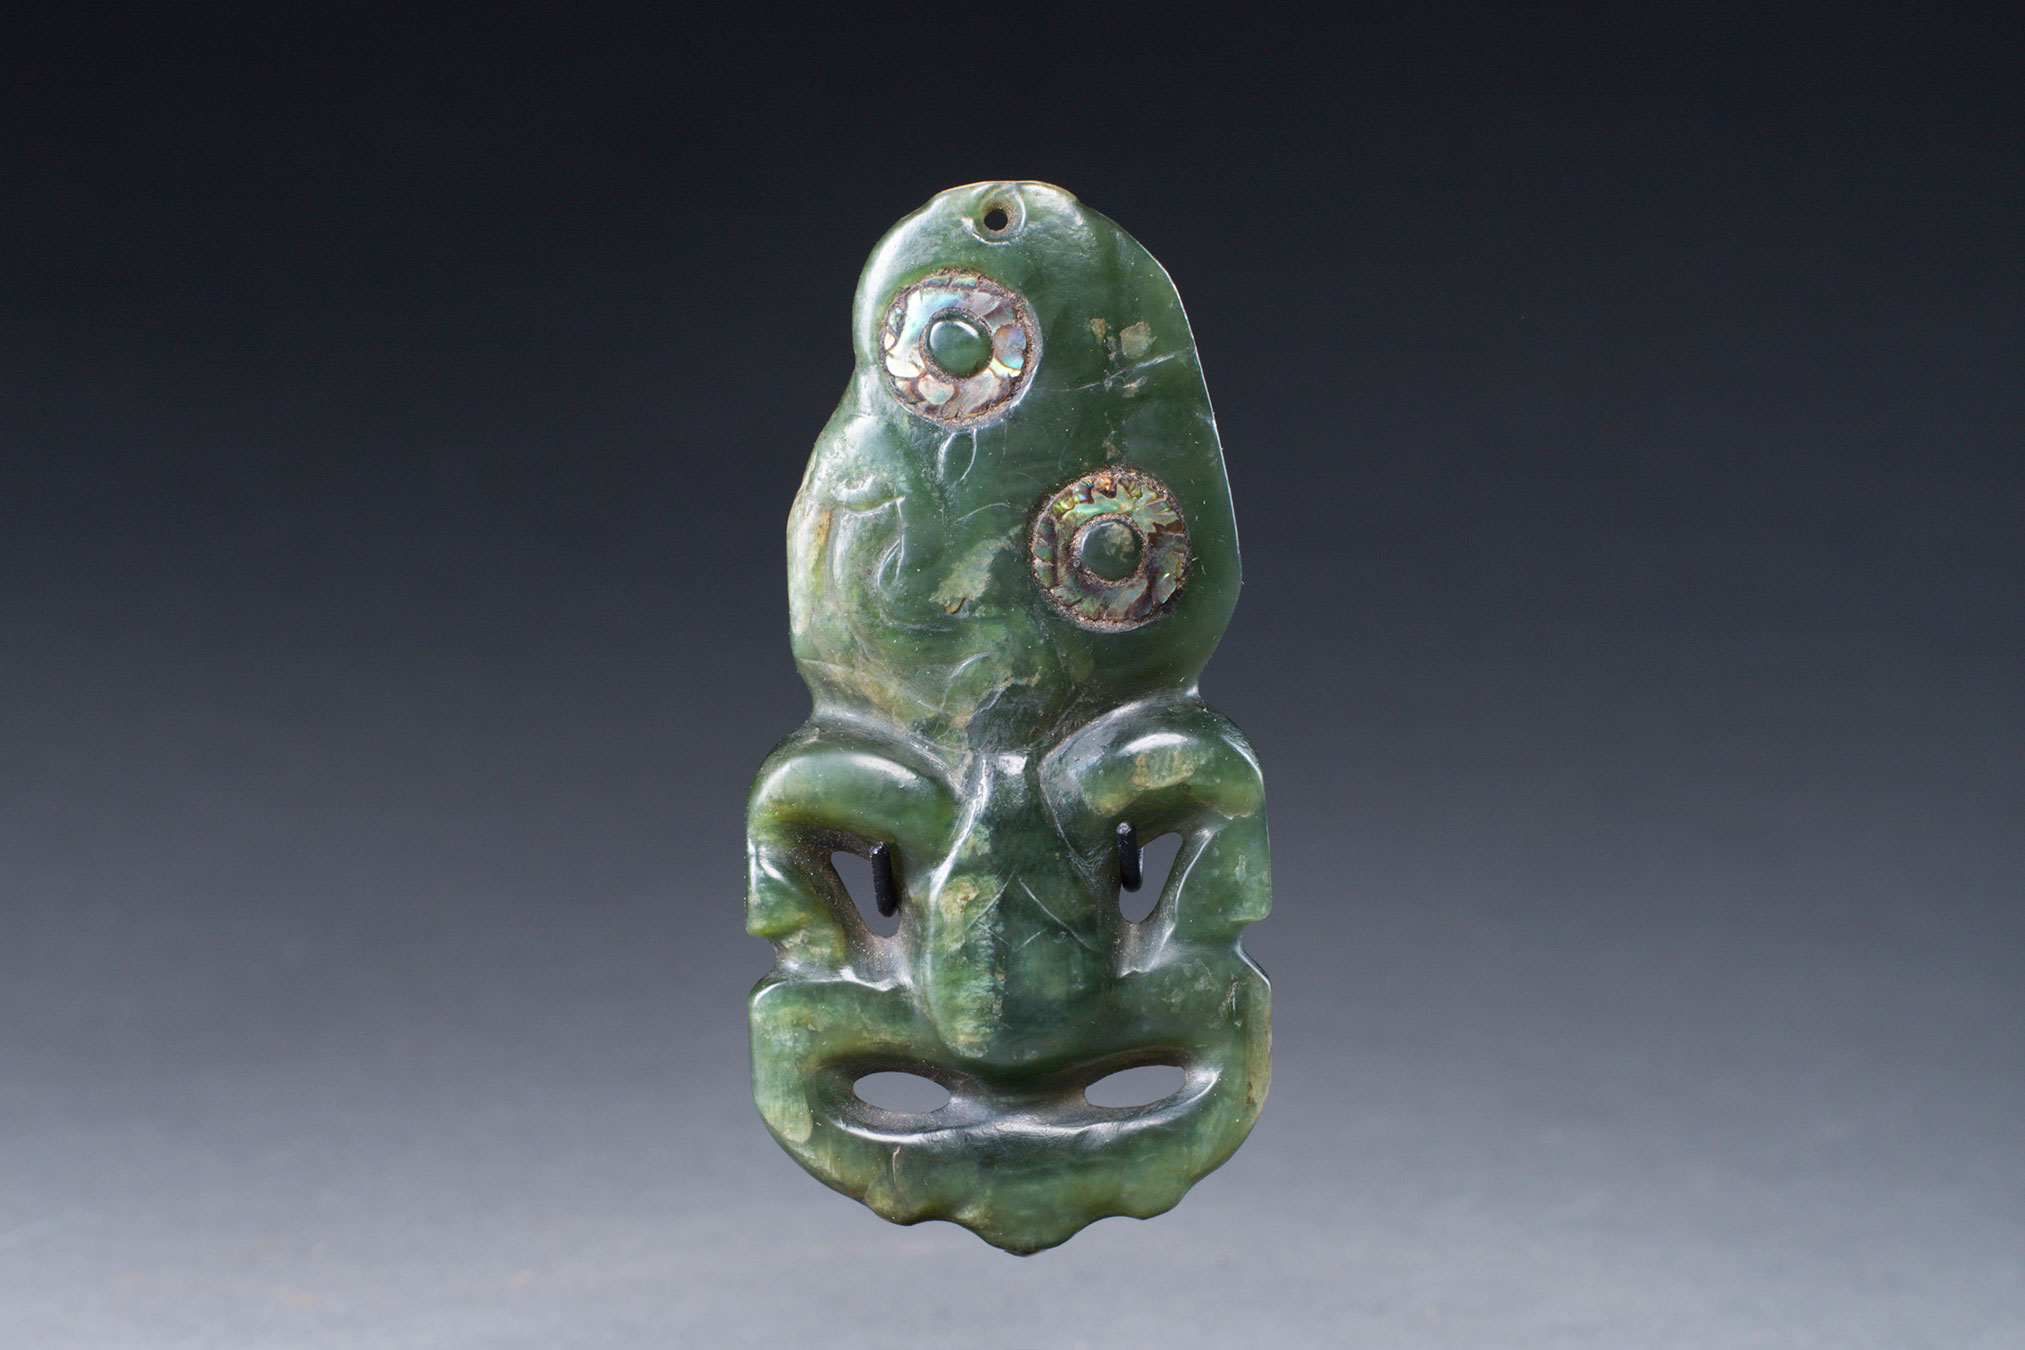 Maori hei tiki greenstone pendant, early 19th century or before, 3-1/4"in height.